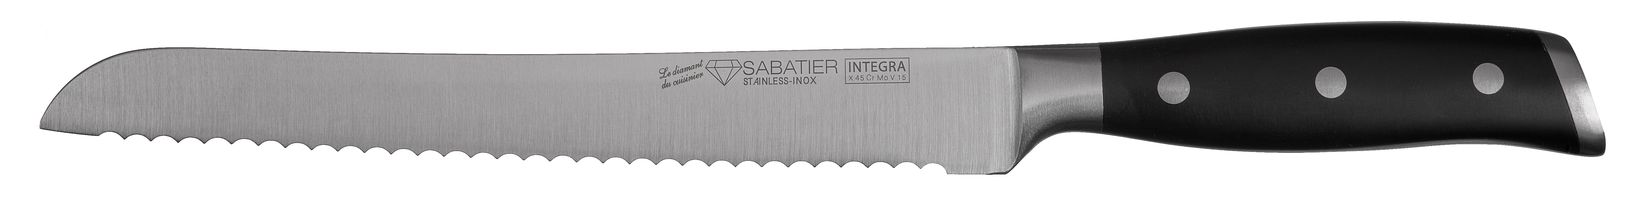 Diamond Sabatier Bread Knife Integra 22 cm